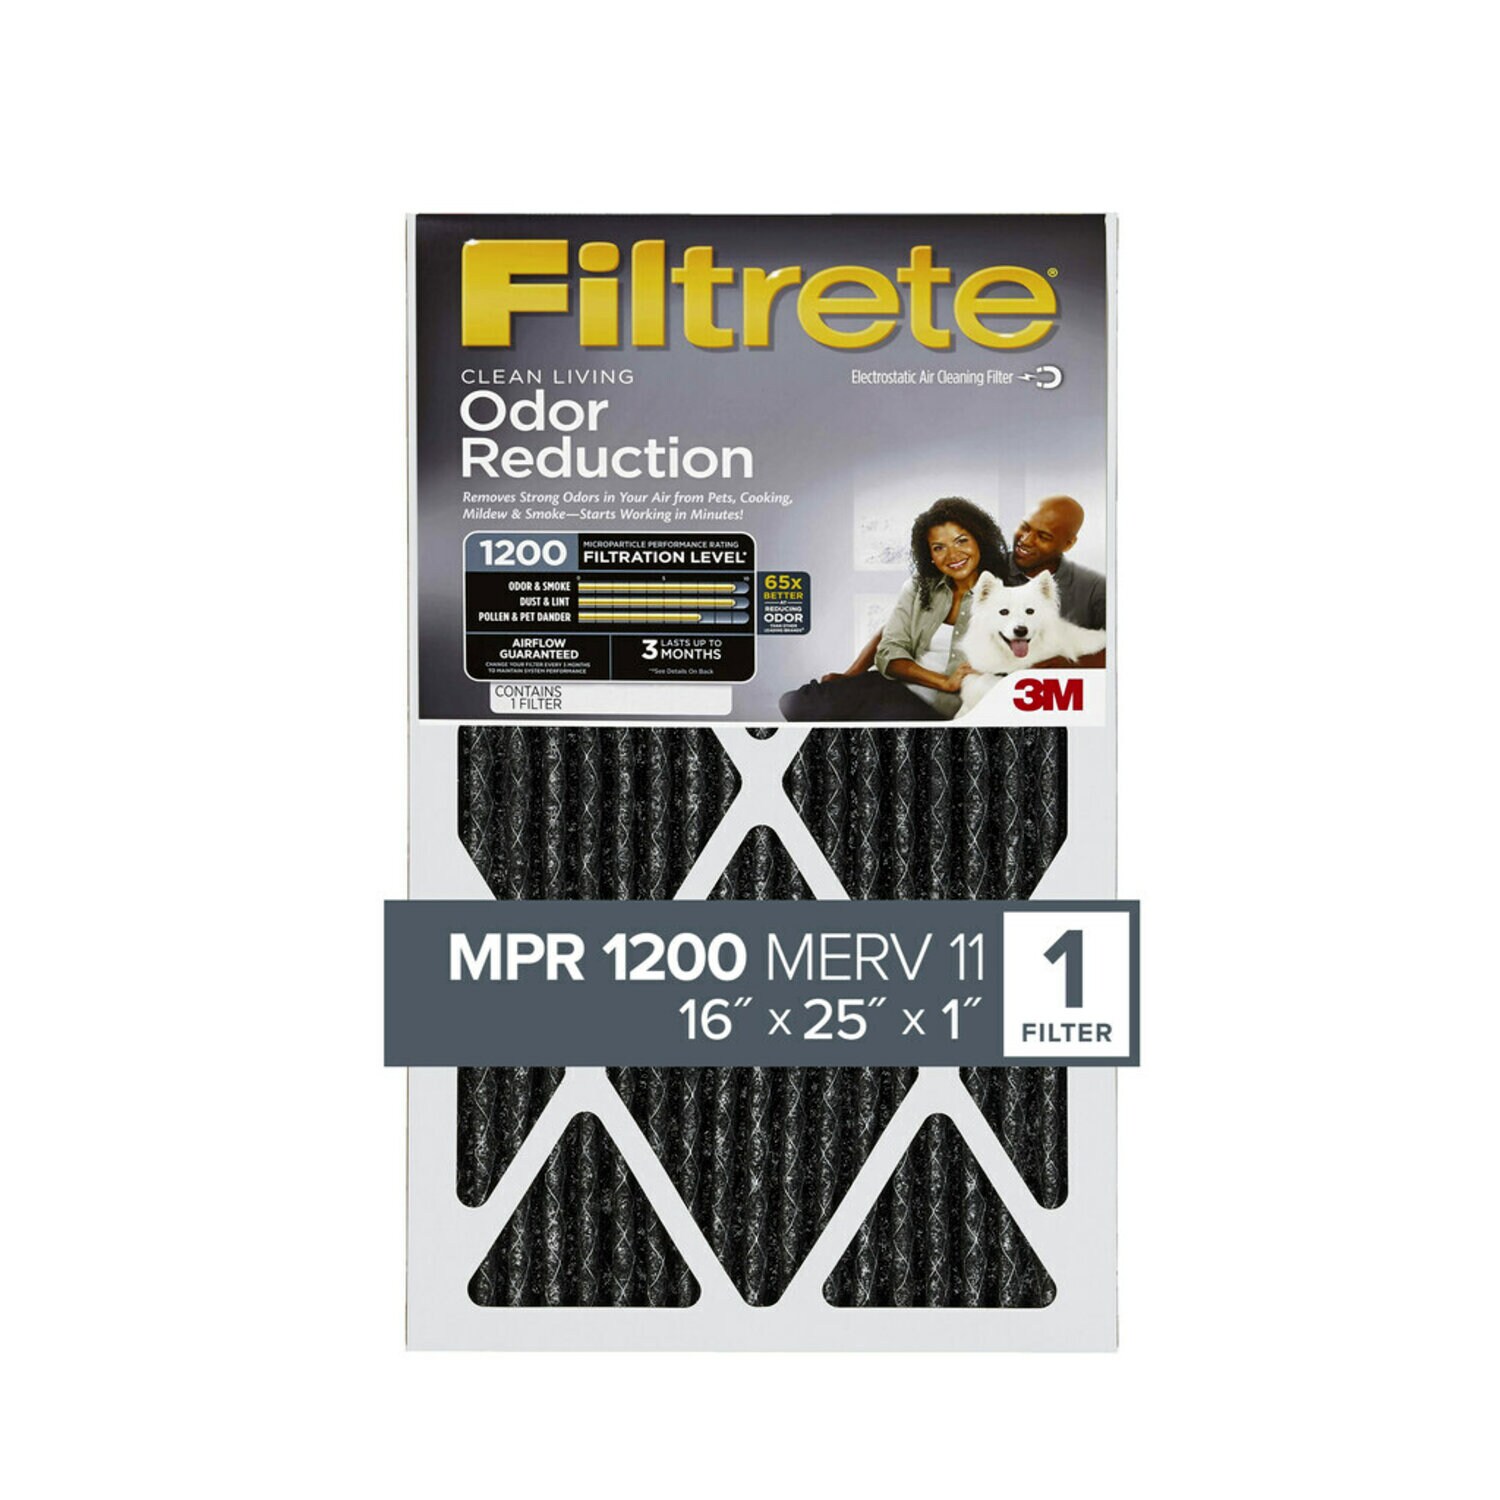 7010240964 - Filtrete Home Odor Reduction Filter HOME01-4, 16 in x 25 in x 1 in
(40,6 cm x 63.5 cm x 2,5 cm)